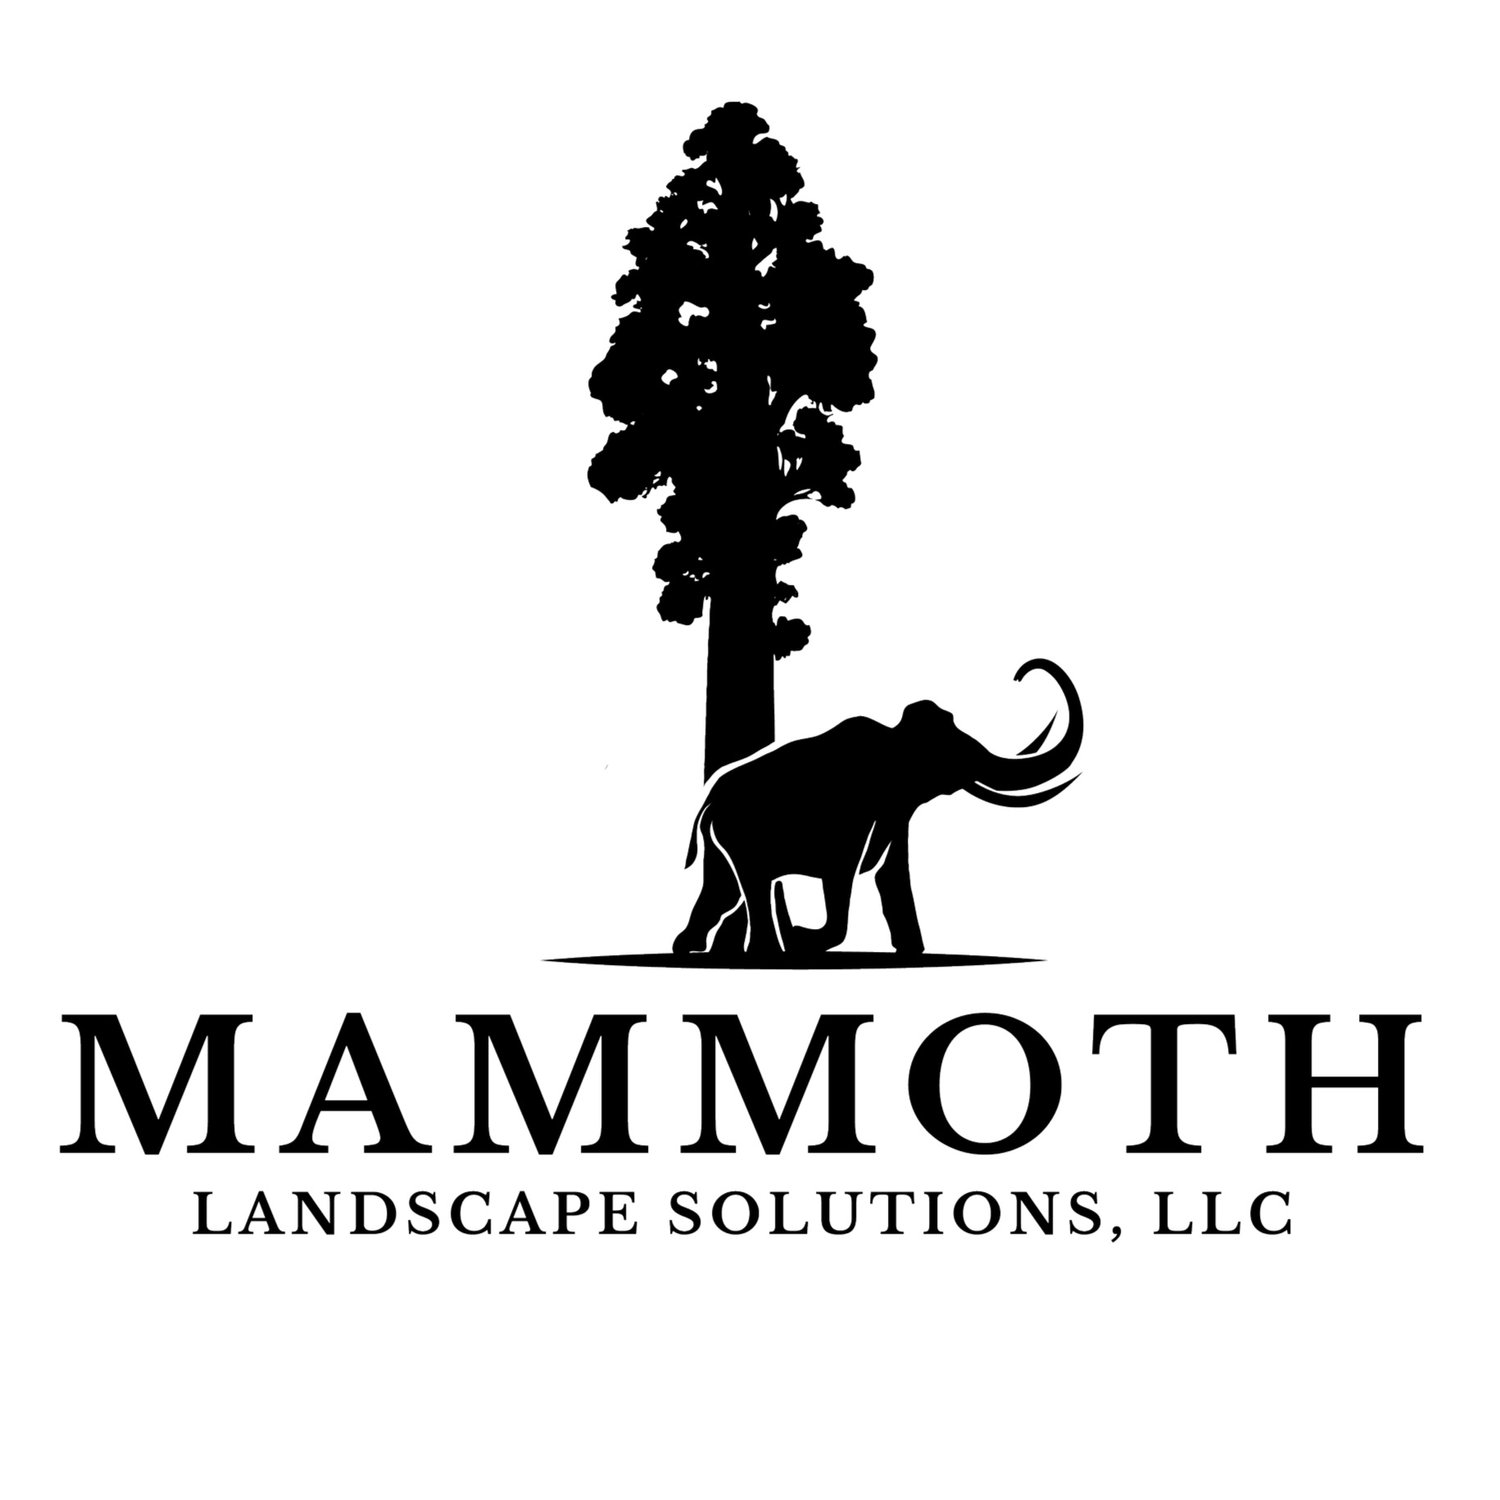 Mammoth Landscape Solutions, LLC